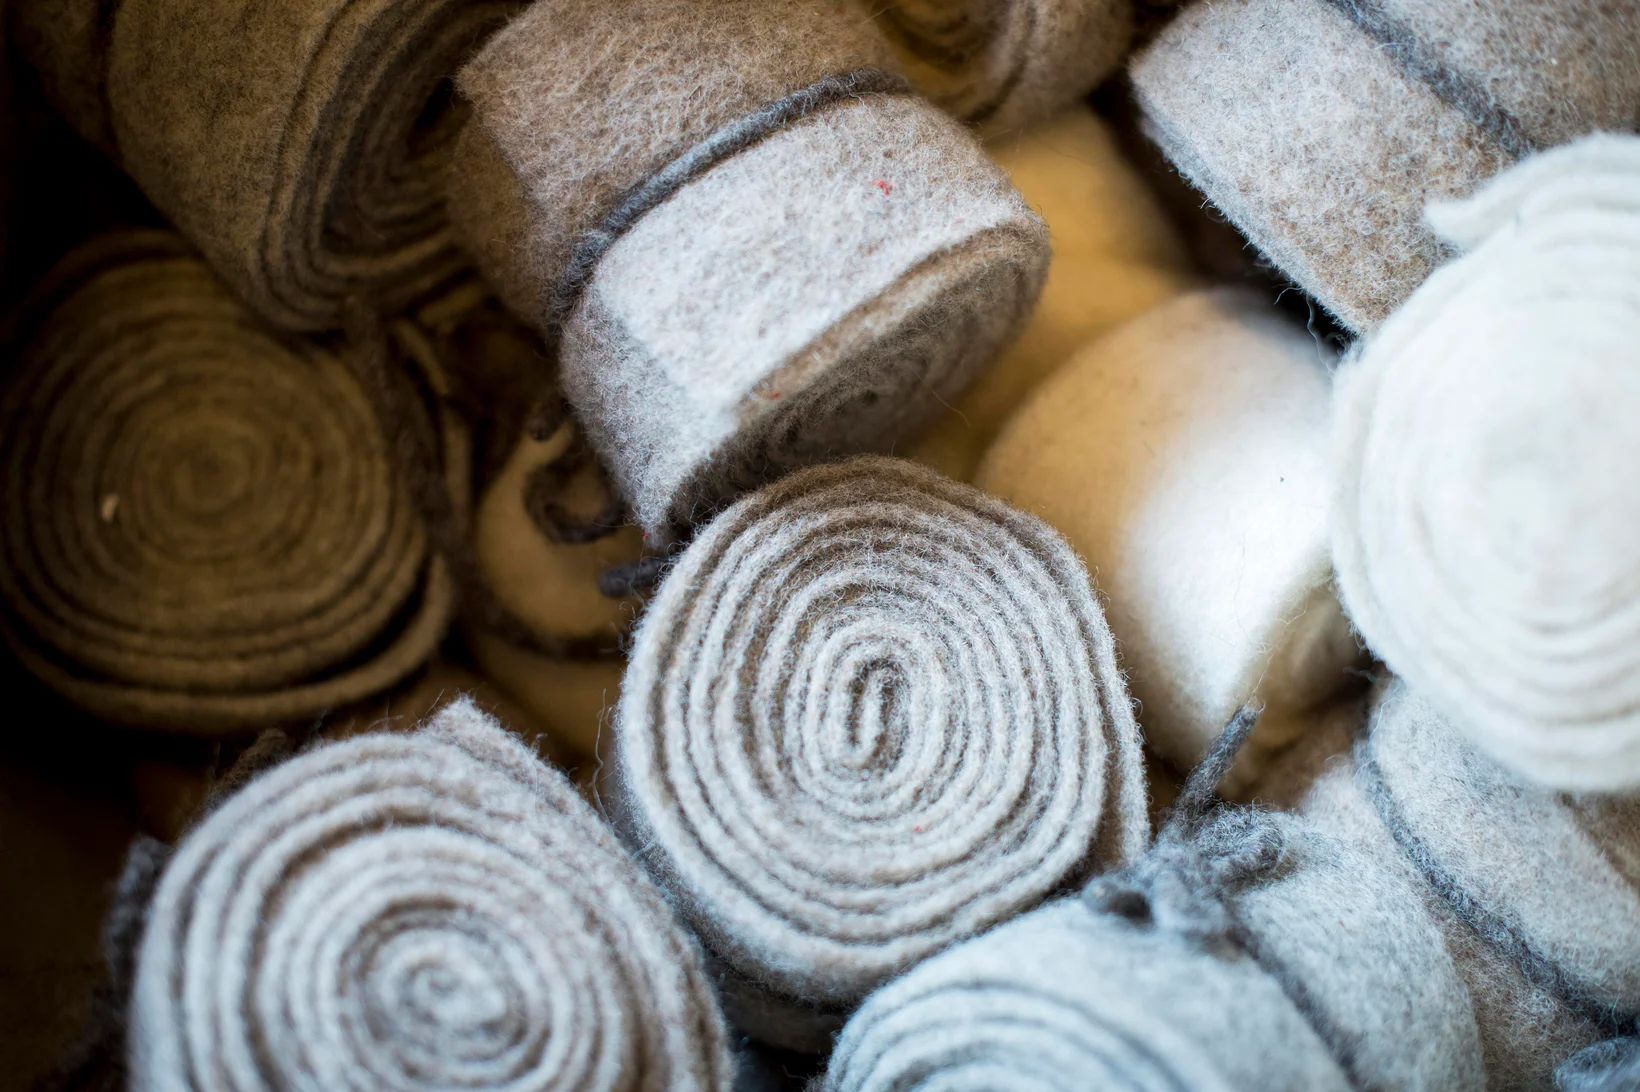 rotoli di lana infeltrita di diverse tinte